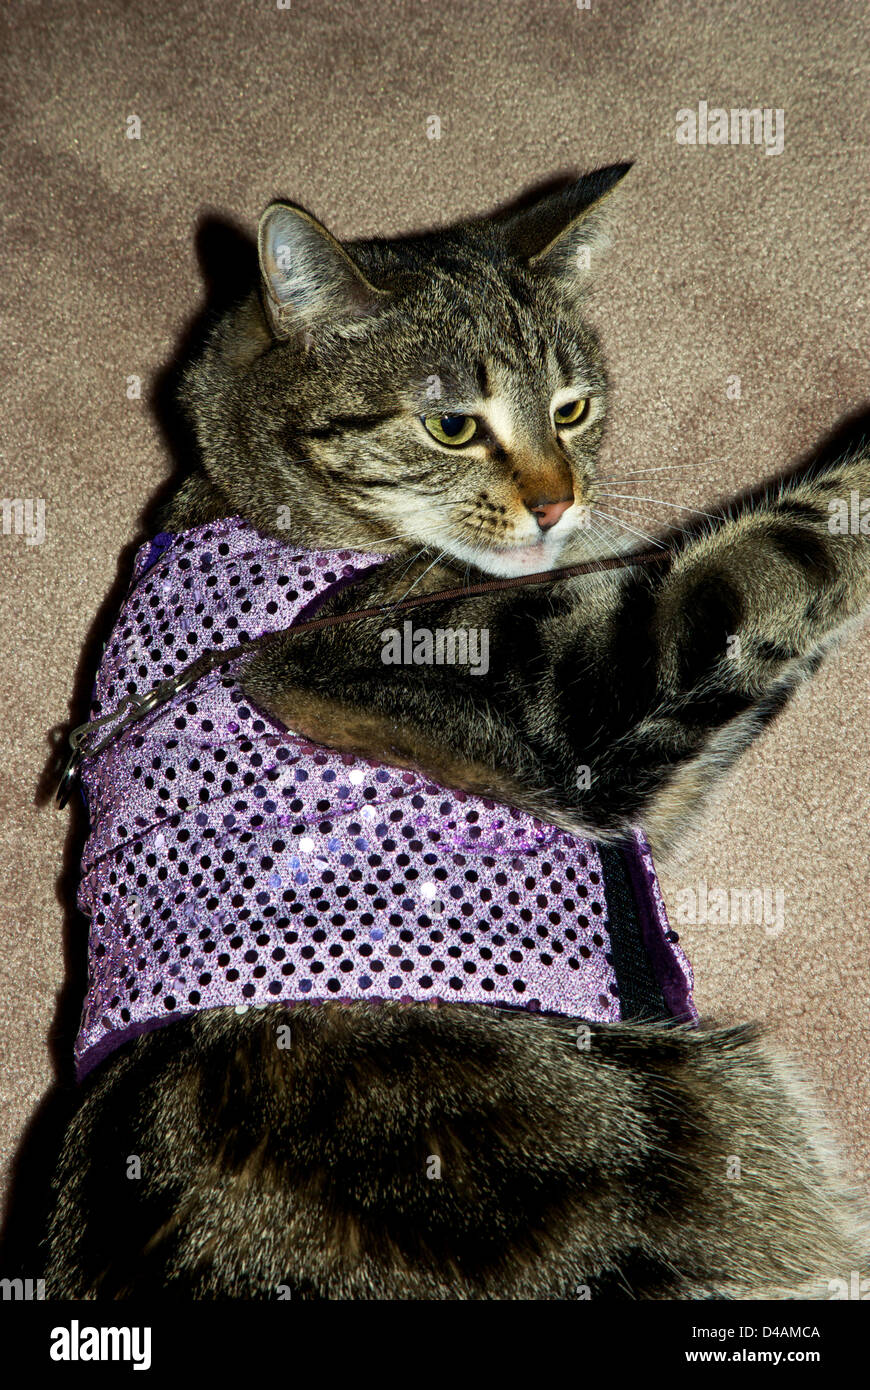 Shorthair domestic tabby cat wearing new glittery leash vest Stock Photo